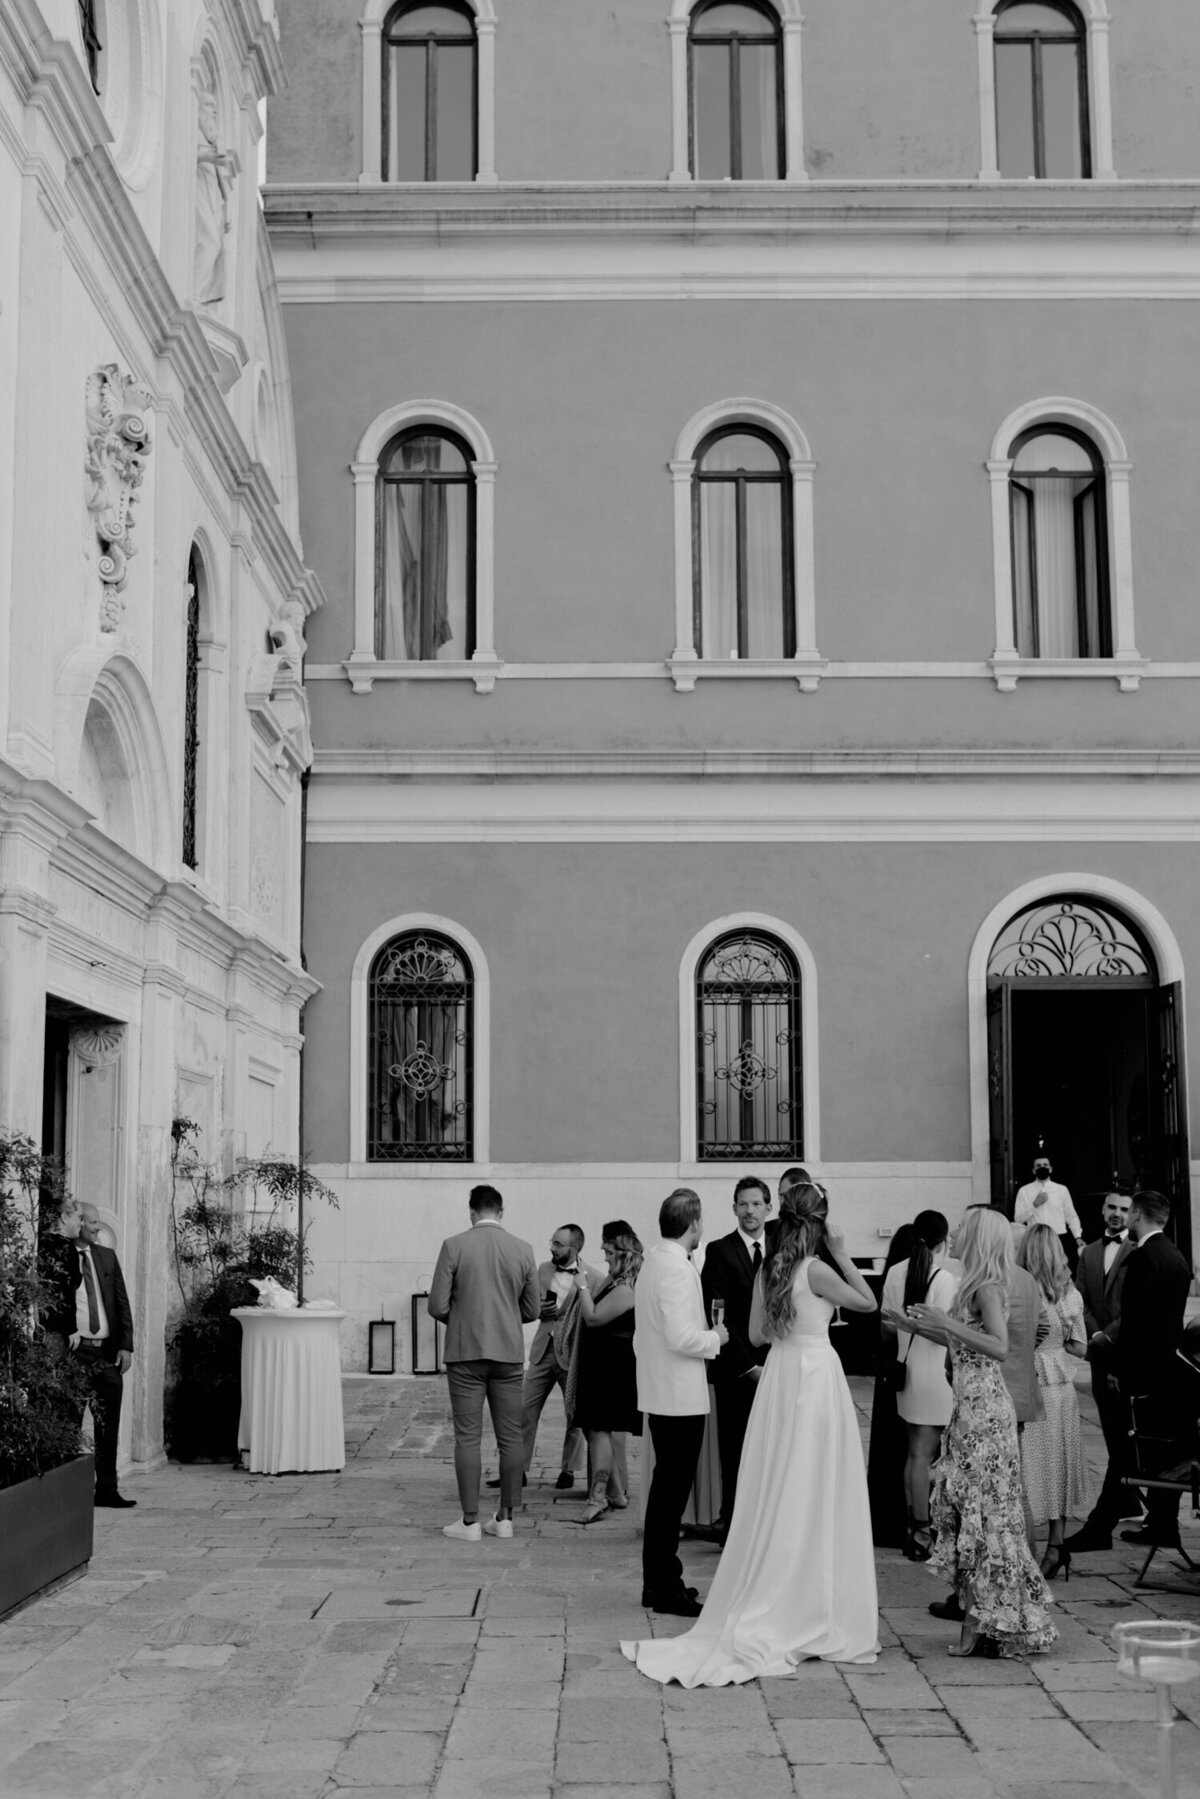 048_Flora_And_Grace_Venice_San_Clemente_Kempinski_Editorial_Wedding_Photographer-588_Luxuy Wedding Photographer in Venice at San Clemente Kempinski. Captured by editorial wedding photographer Flora and Grace Weddings.